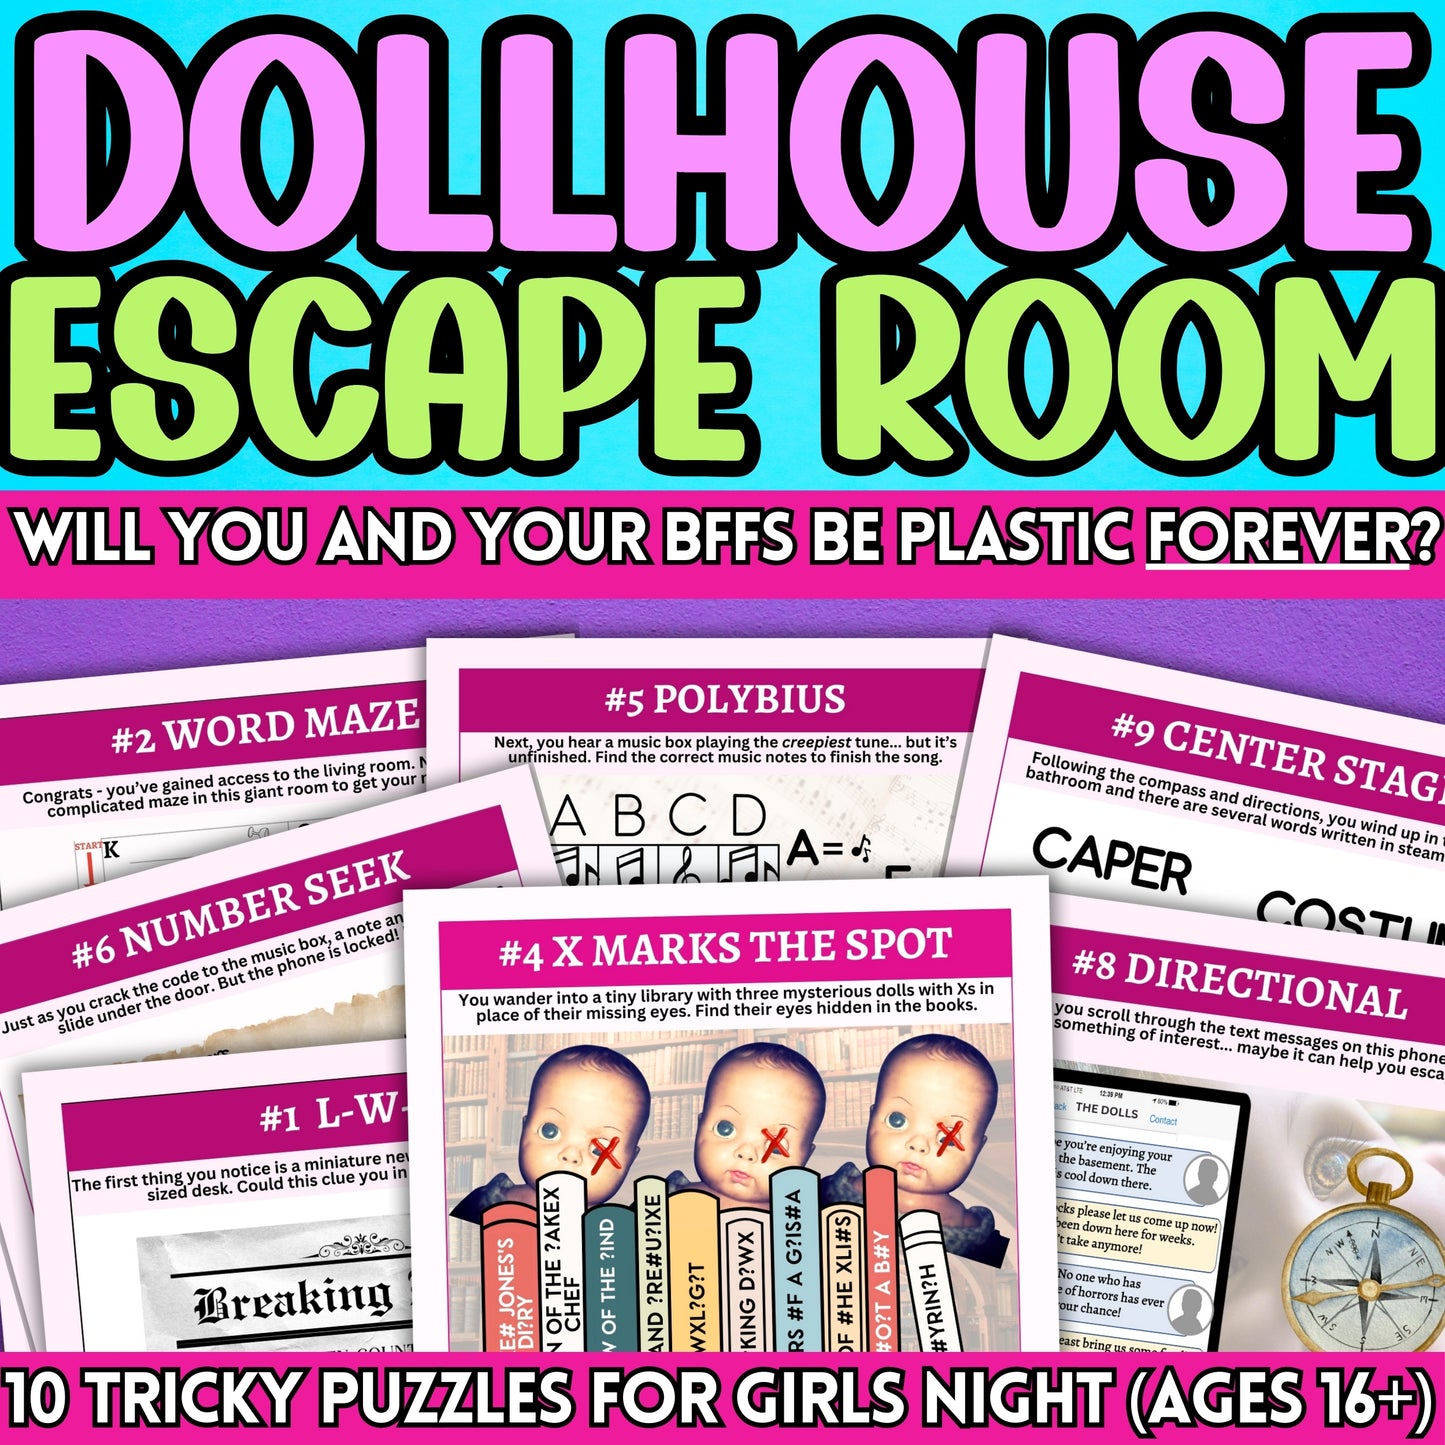 Creepy Dollhouse Escape Room